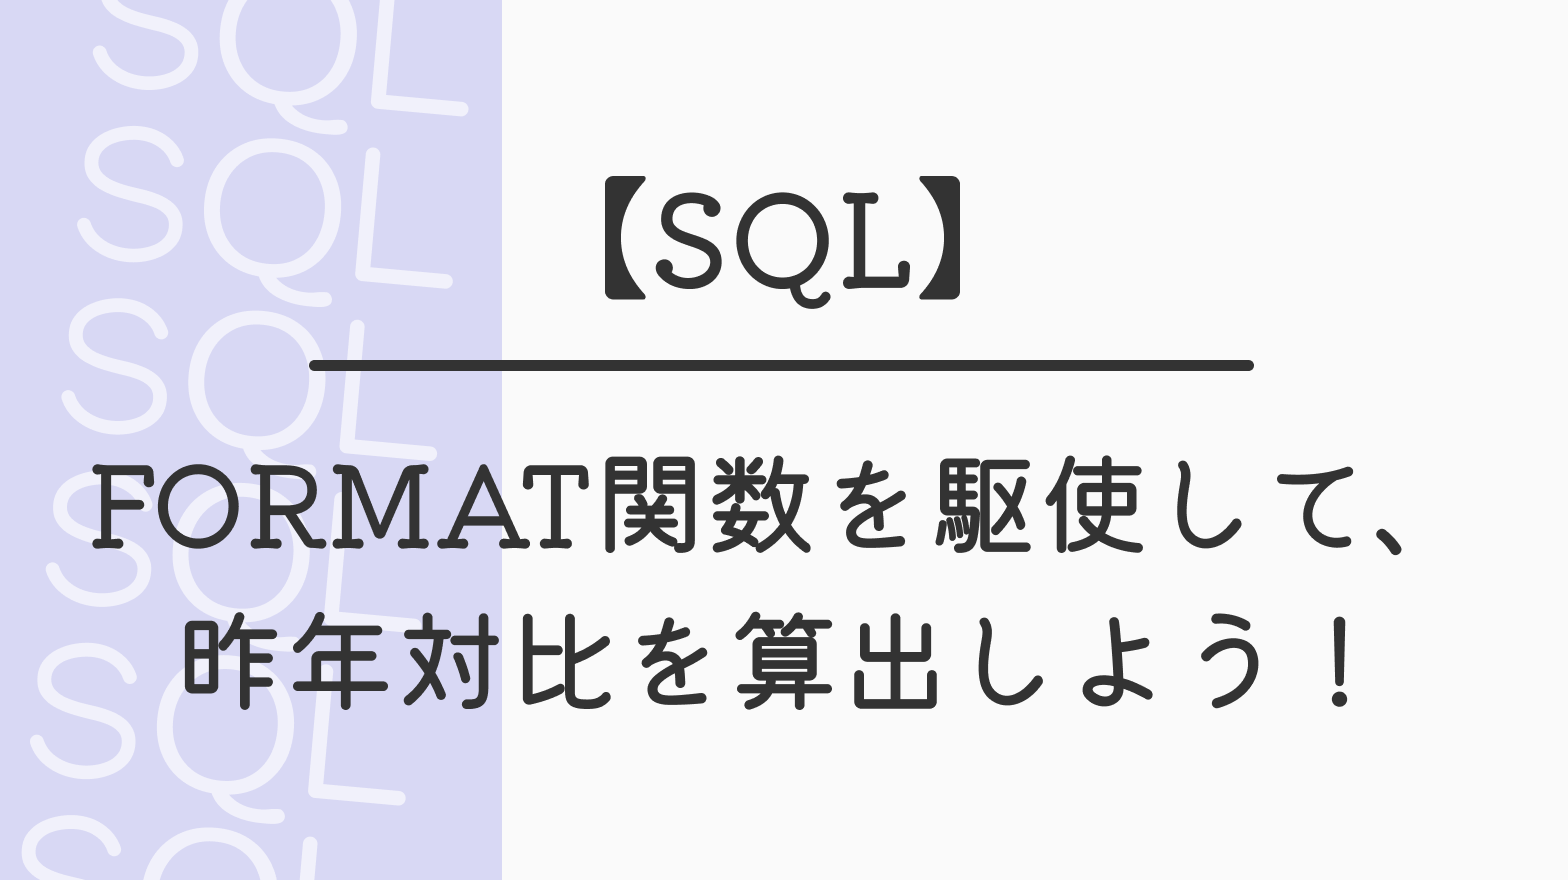 【SQL】FORMAT関数を駆使して、昨年対比を算出しよう！